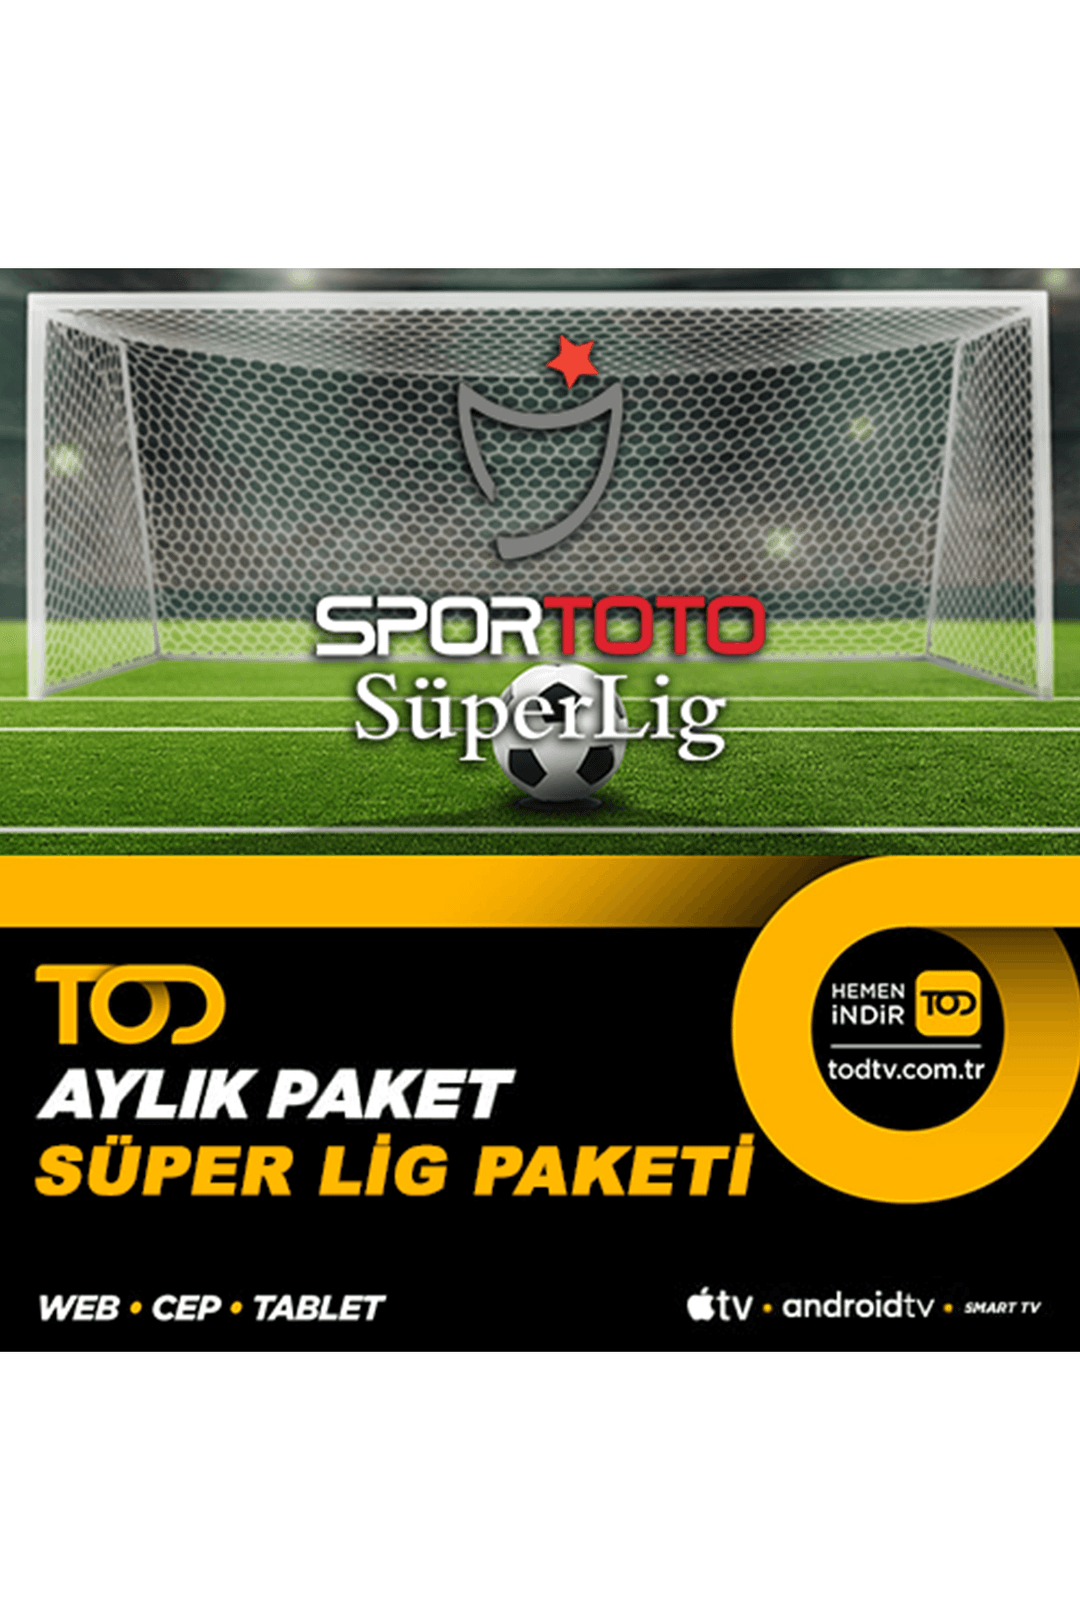 Aylık Süper Lig Paketi - 4 Ekran (Web+ Cep+ Tablet + Smart Tv+ Apple TV)